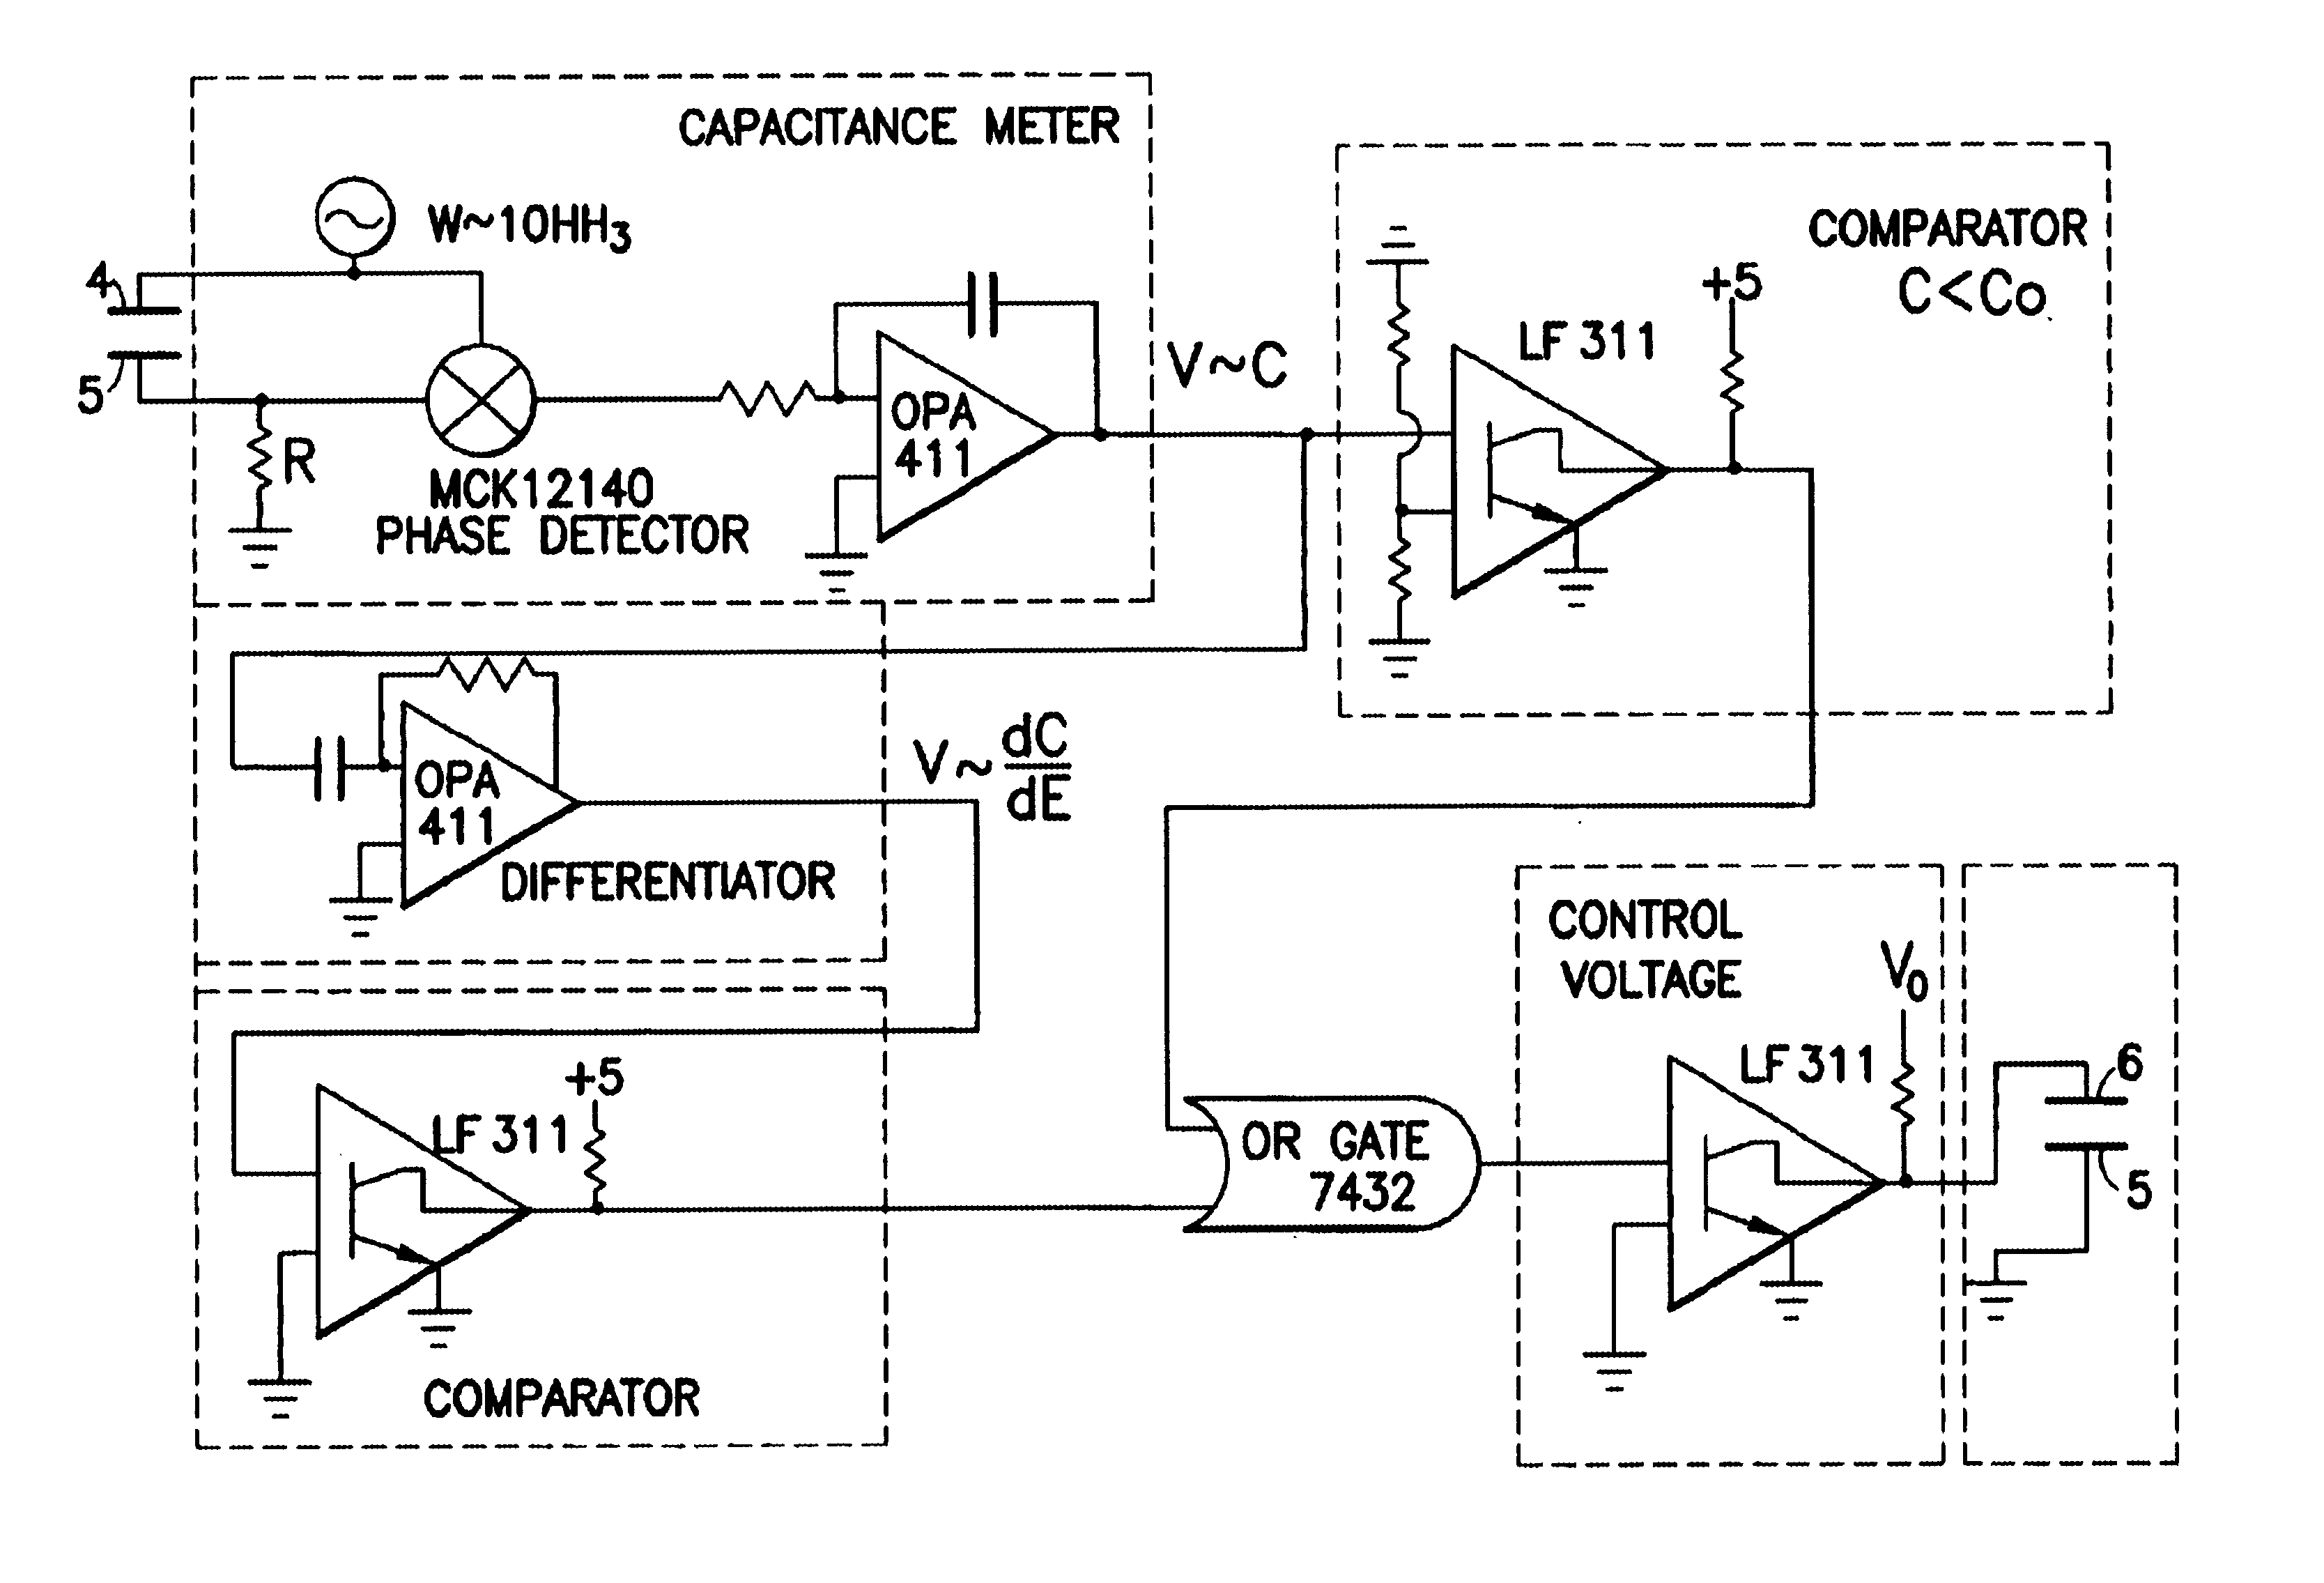 Resonant operation of MEMS switch